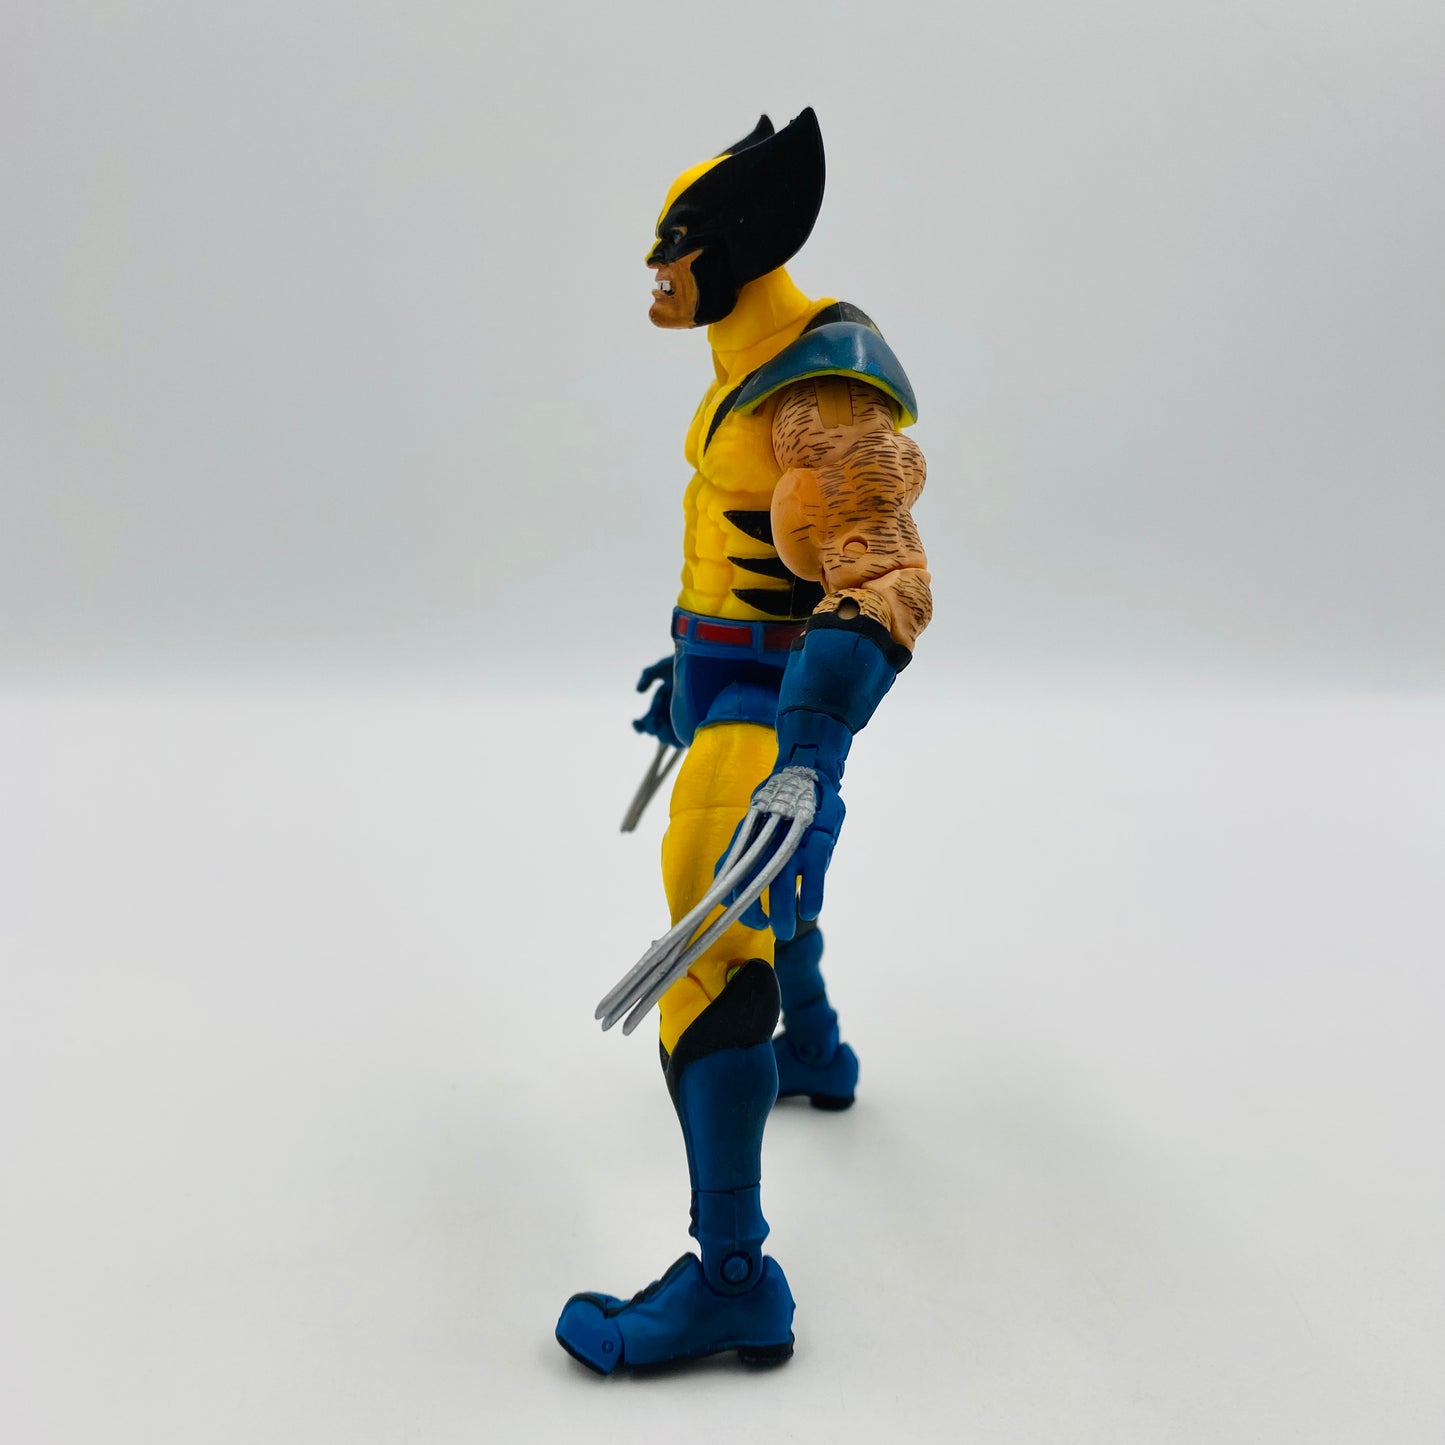 Marvel Legends Series 3 Wolverine loose 6” action figure (2002) Toy Biz